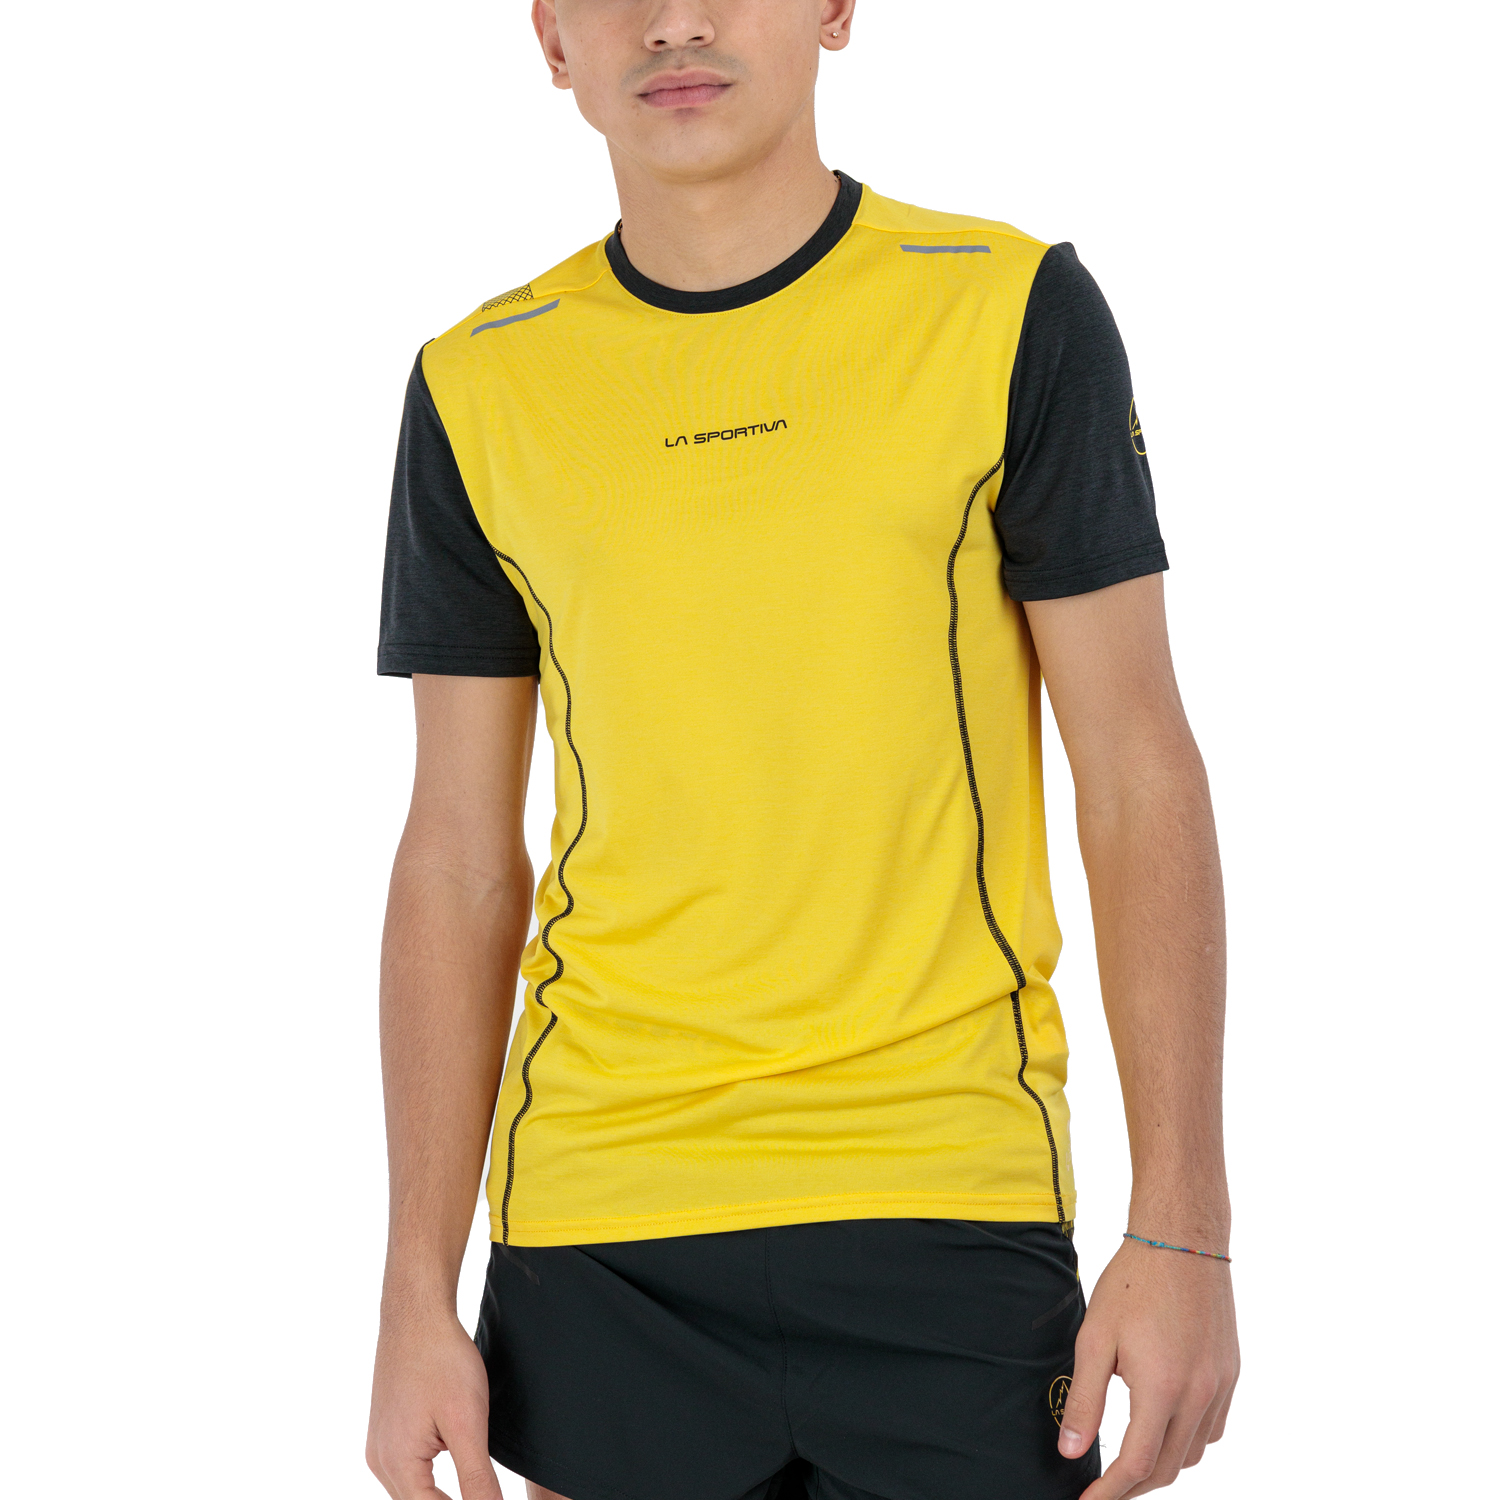 La Sportiva Tracer Camiseta - Yellow/Black